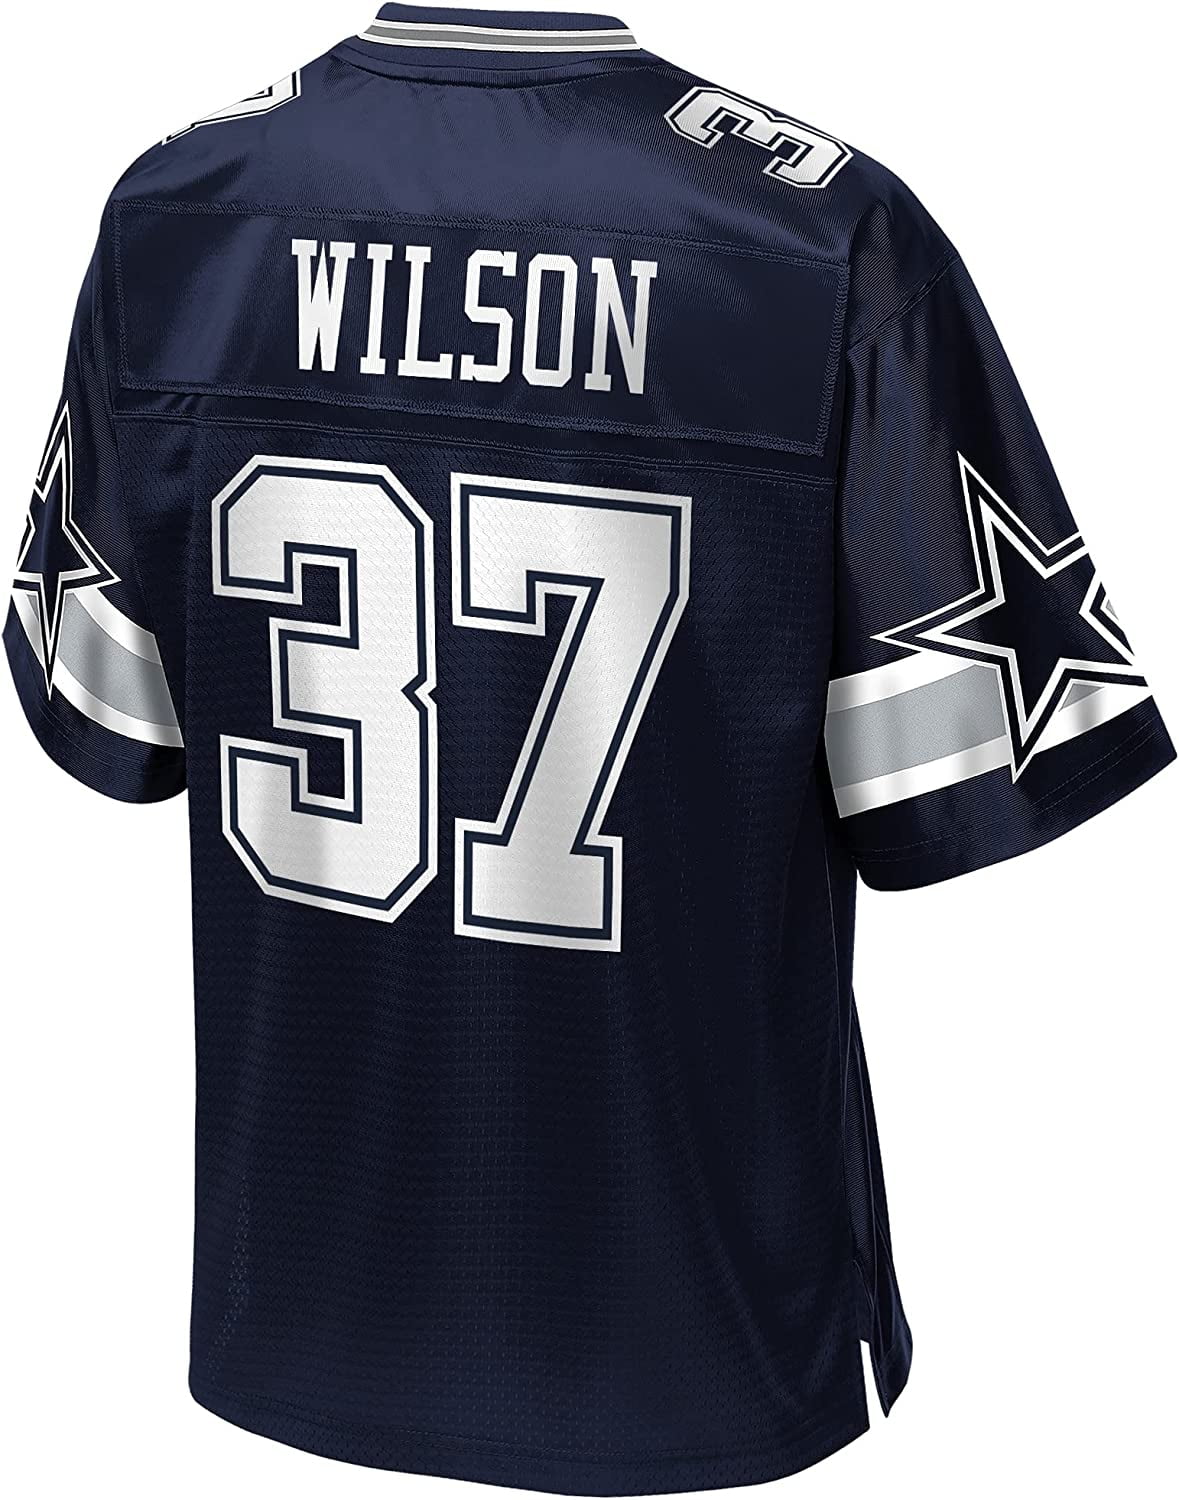 Wilson Donovan jersey